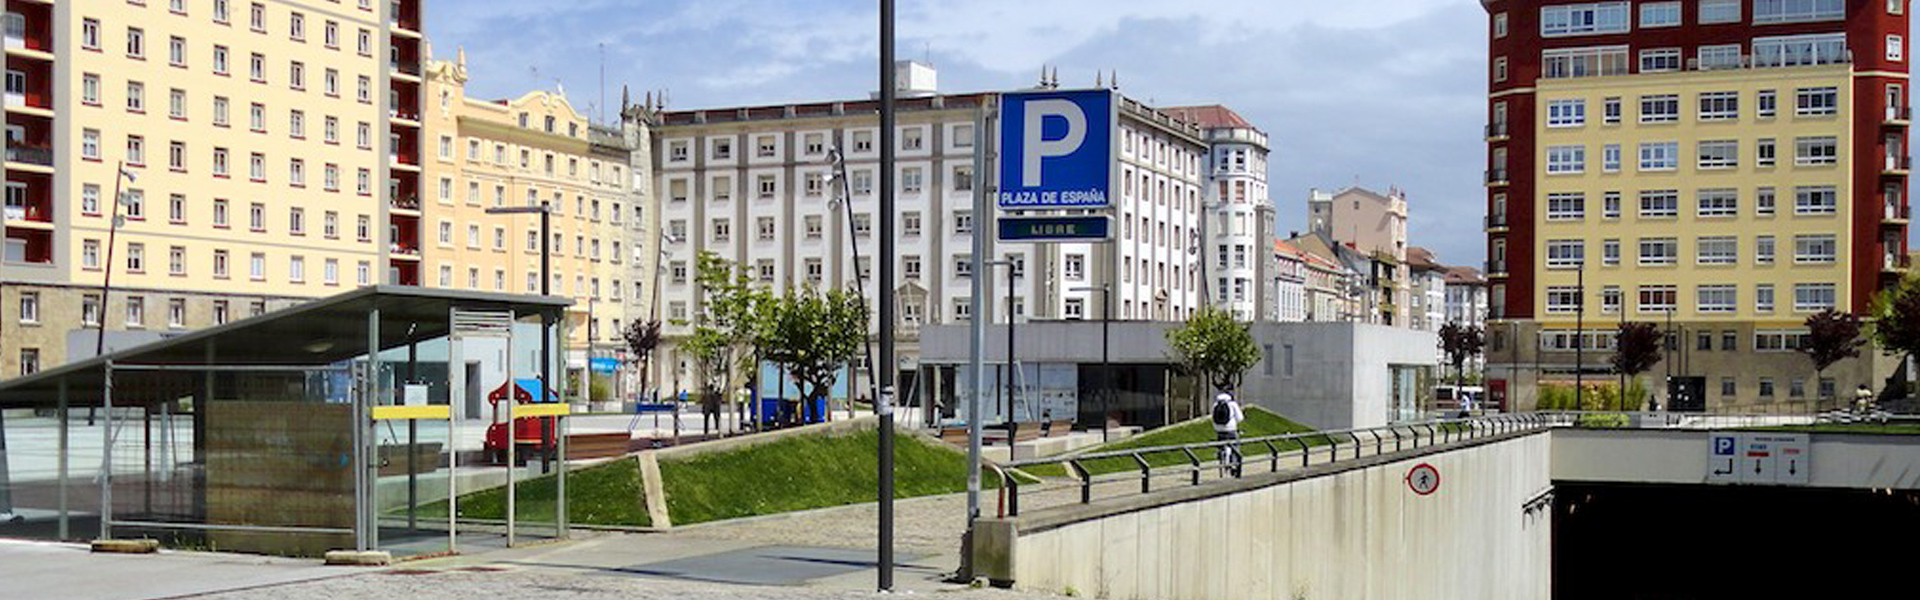 Parking Plaza de España, Ferrol